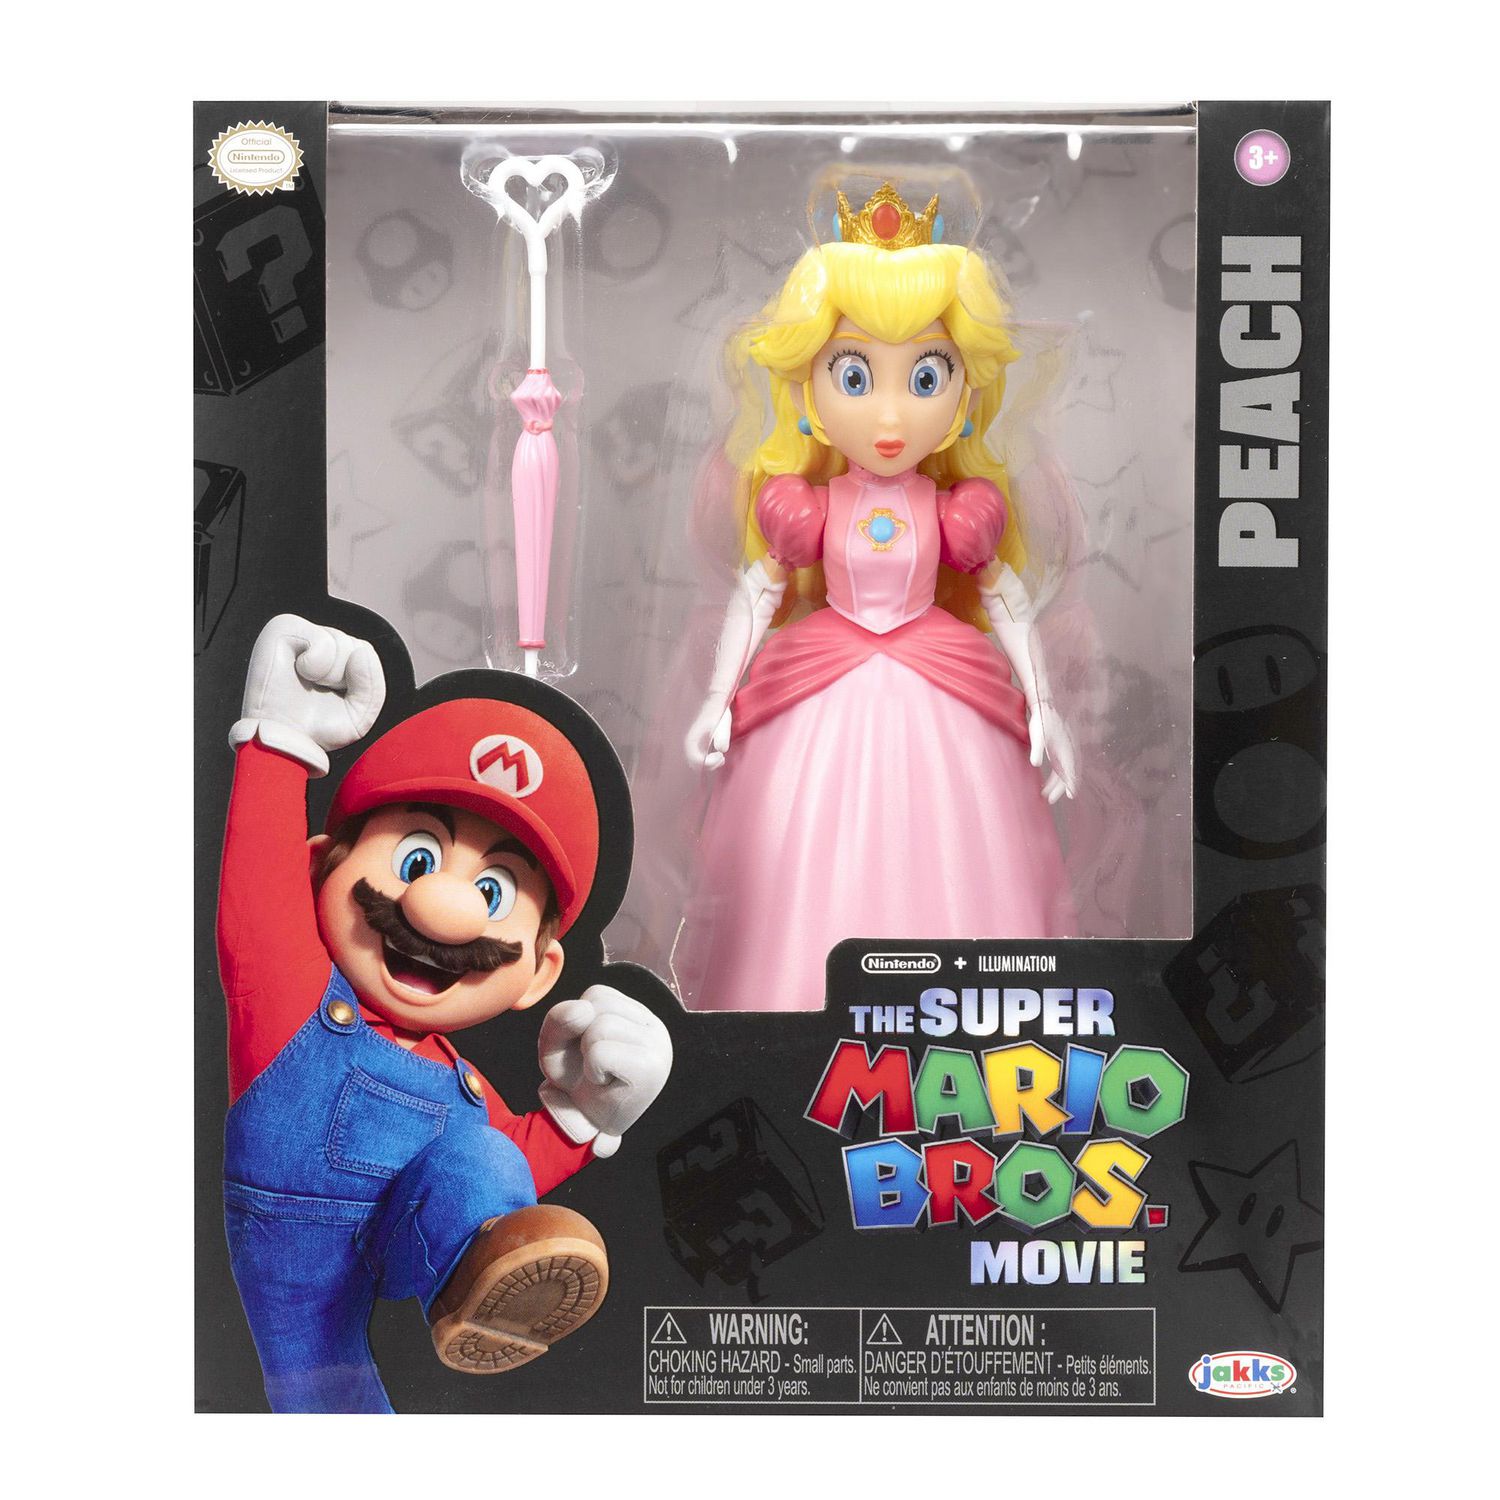 Steam Workshop::Princess Peach (Super Mario Odyssey)